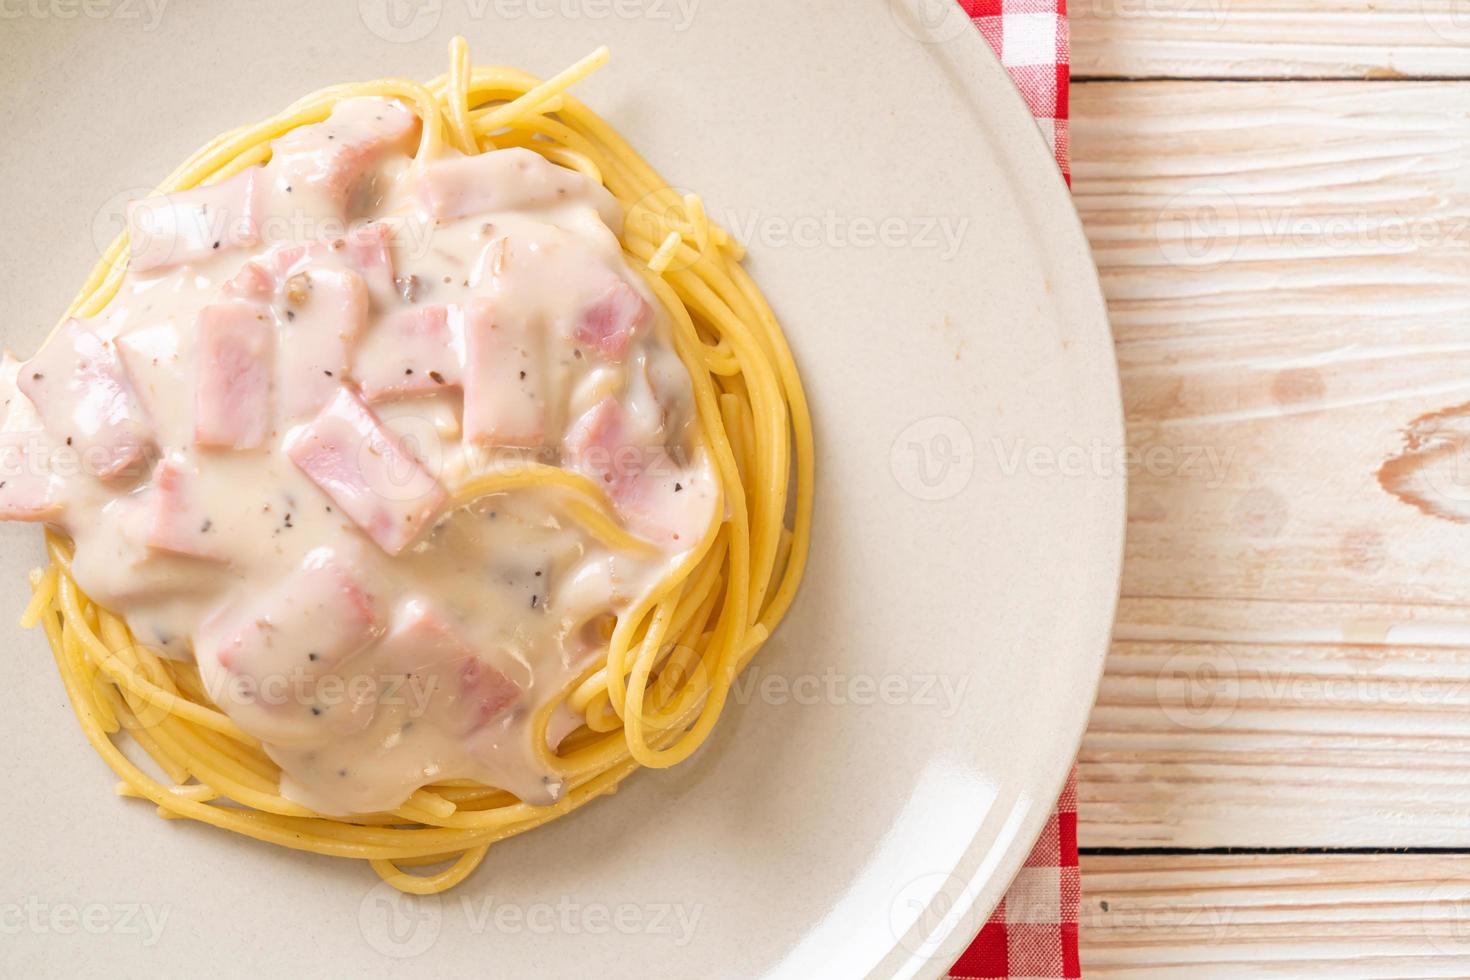 Homemade spaghetti white cream sauce with ham - Italian food style photo